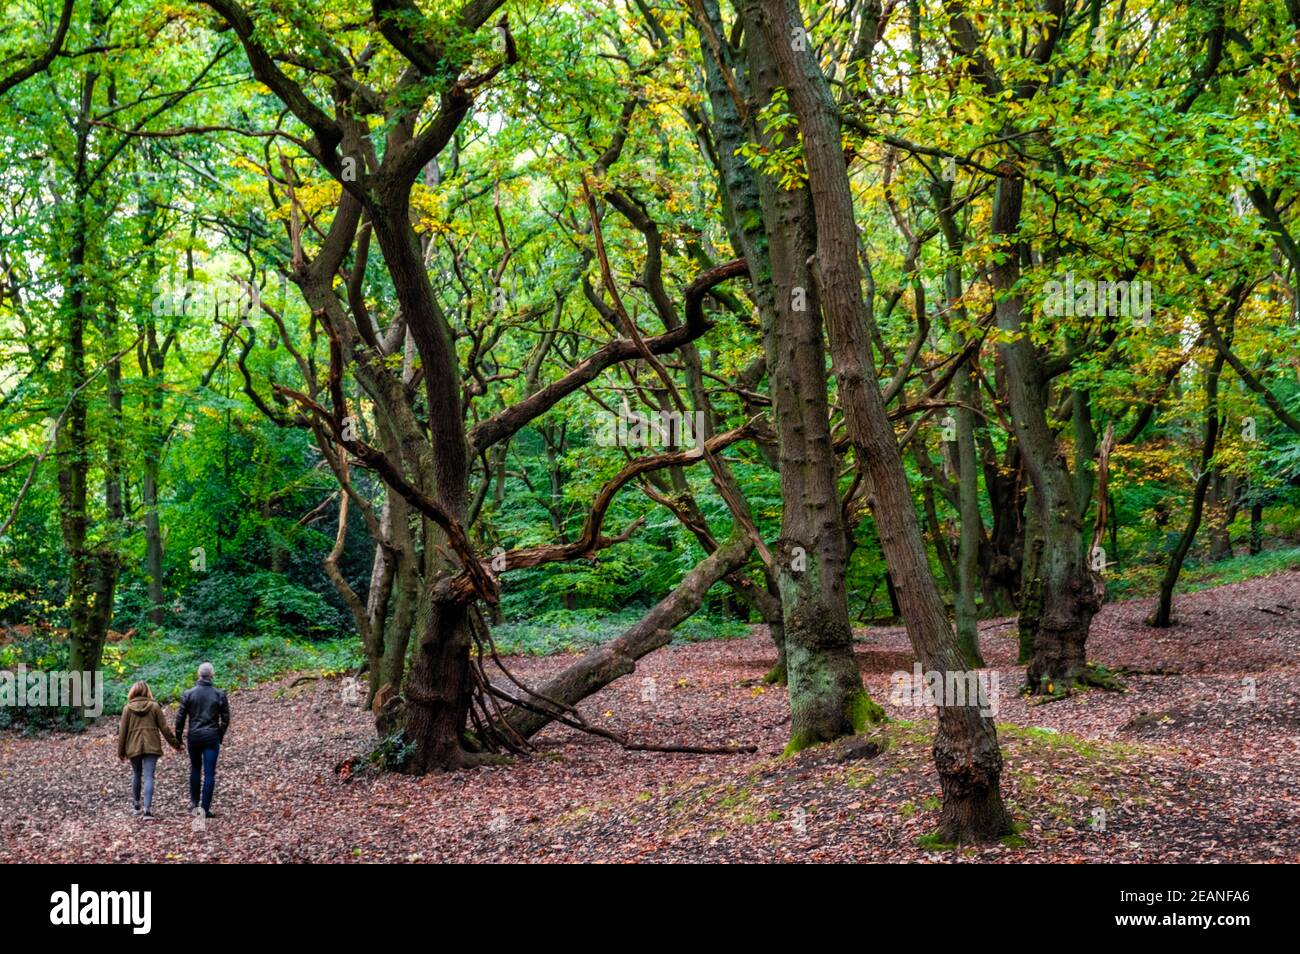 Beech tree woodland in autumn, pedestrians walking through the trees, Hampstead Heath, London, England, United Kingdom, Europe Stock Photo